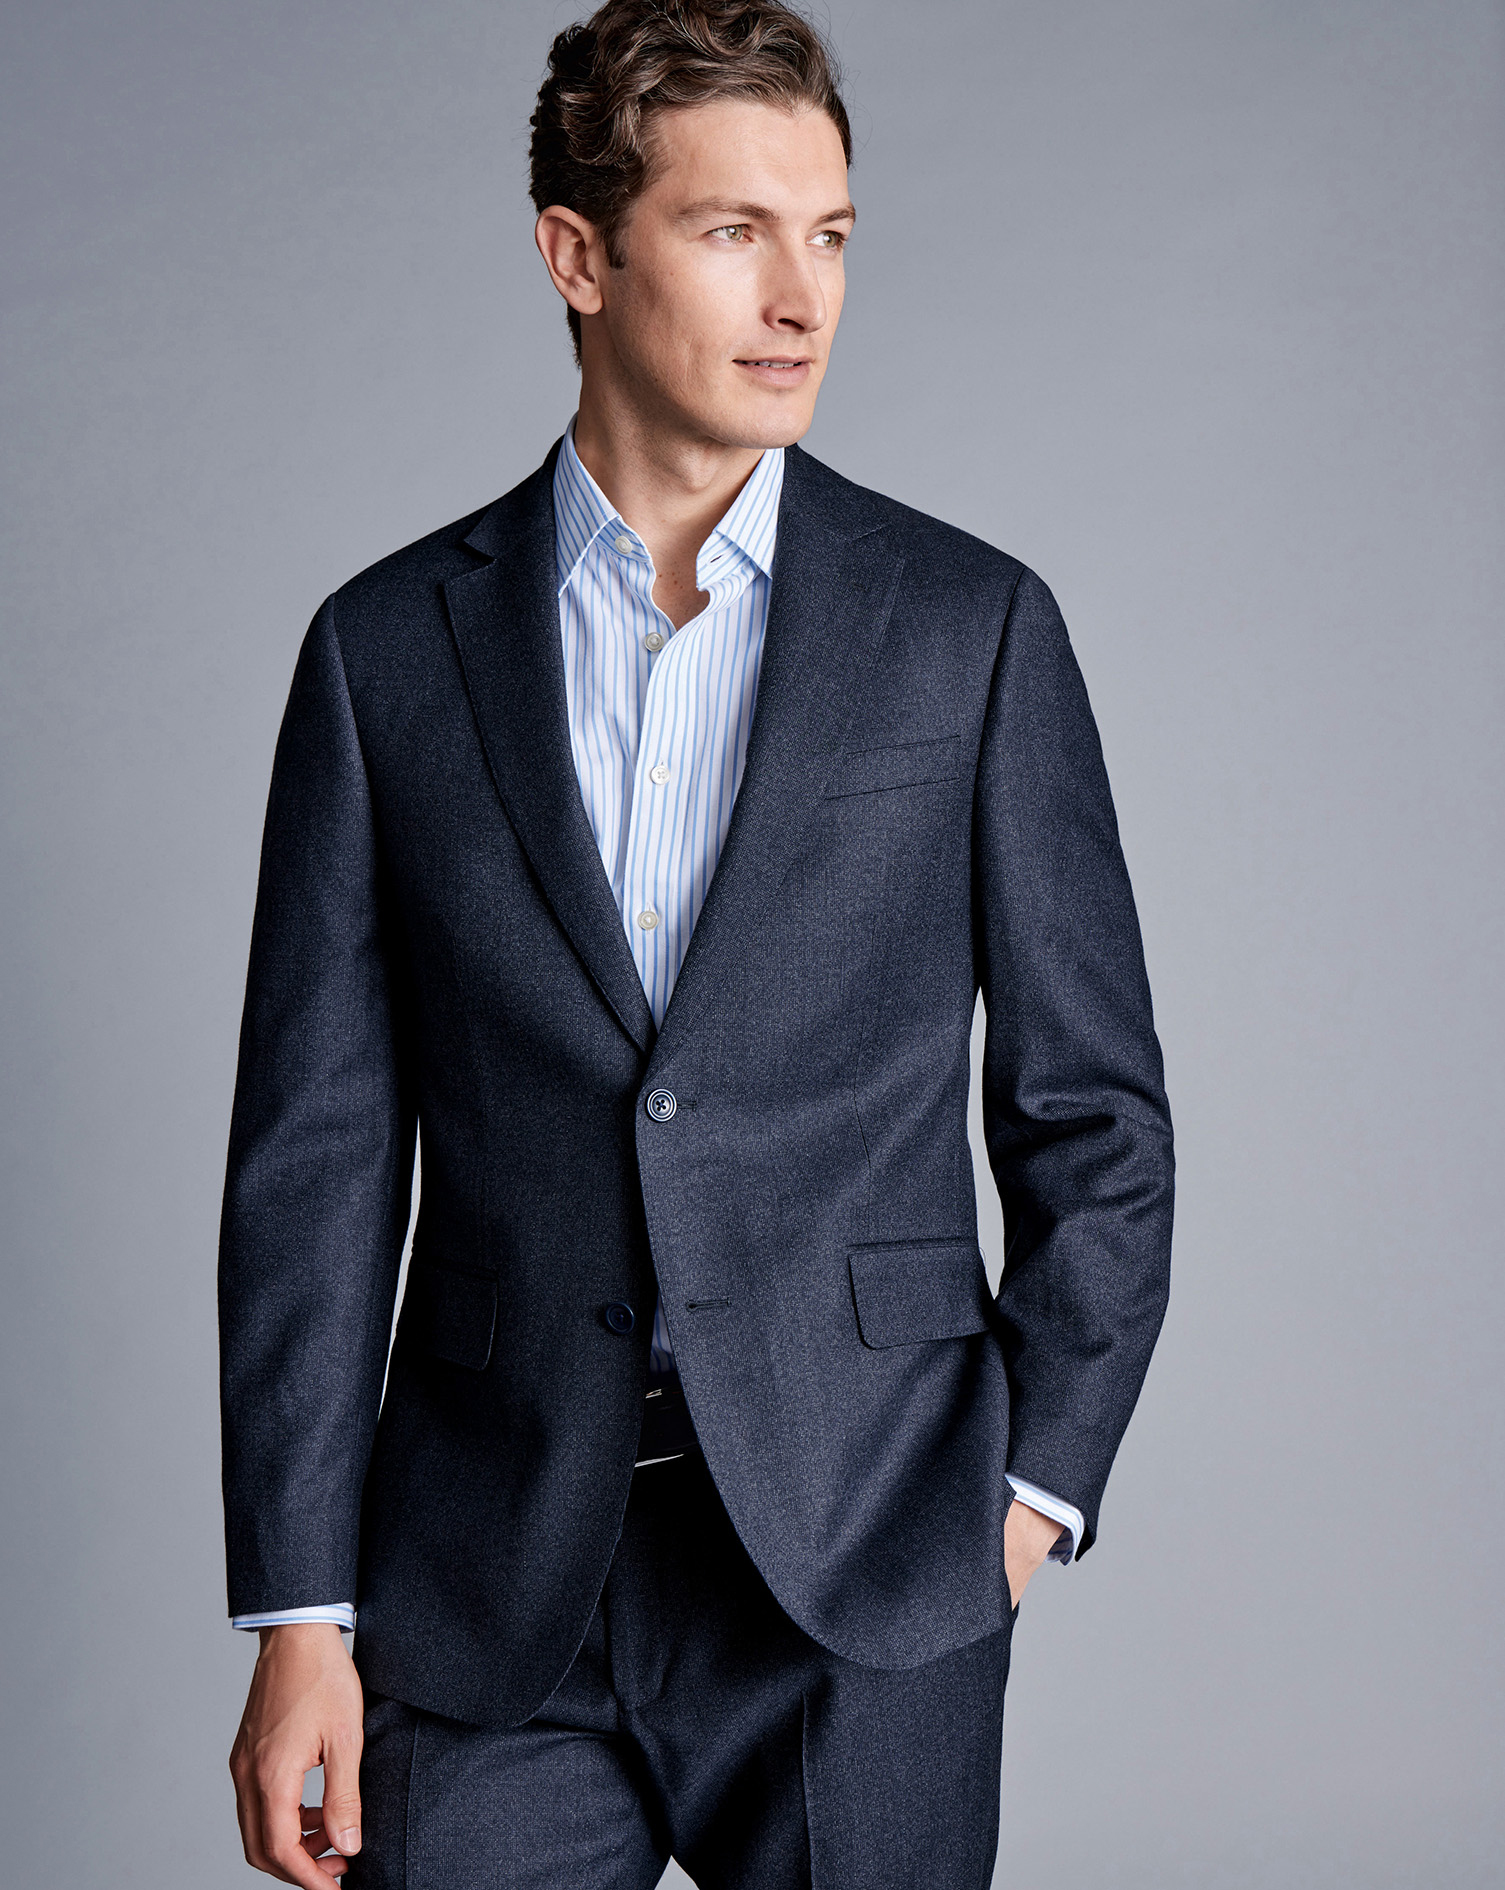 Men's Charles Tyrwhitt Italian Pindot Suit na Jacket - Denim Blue Size 42L Wool
